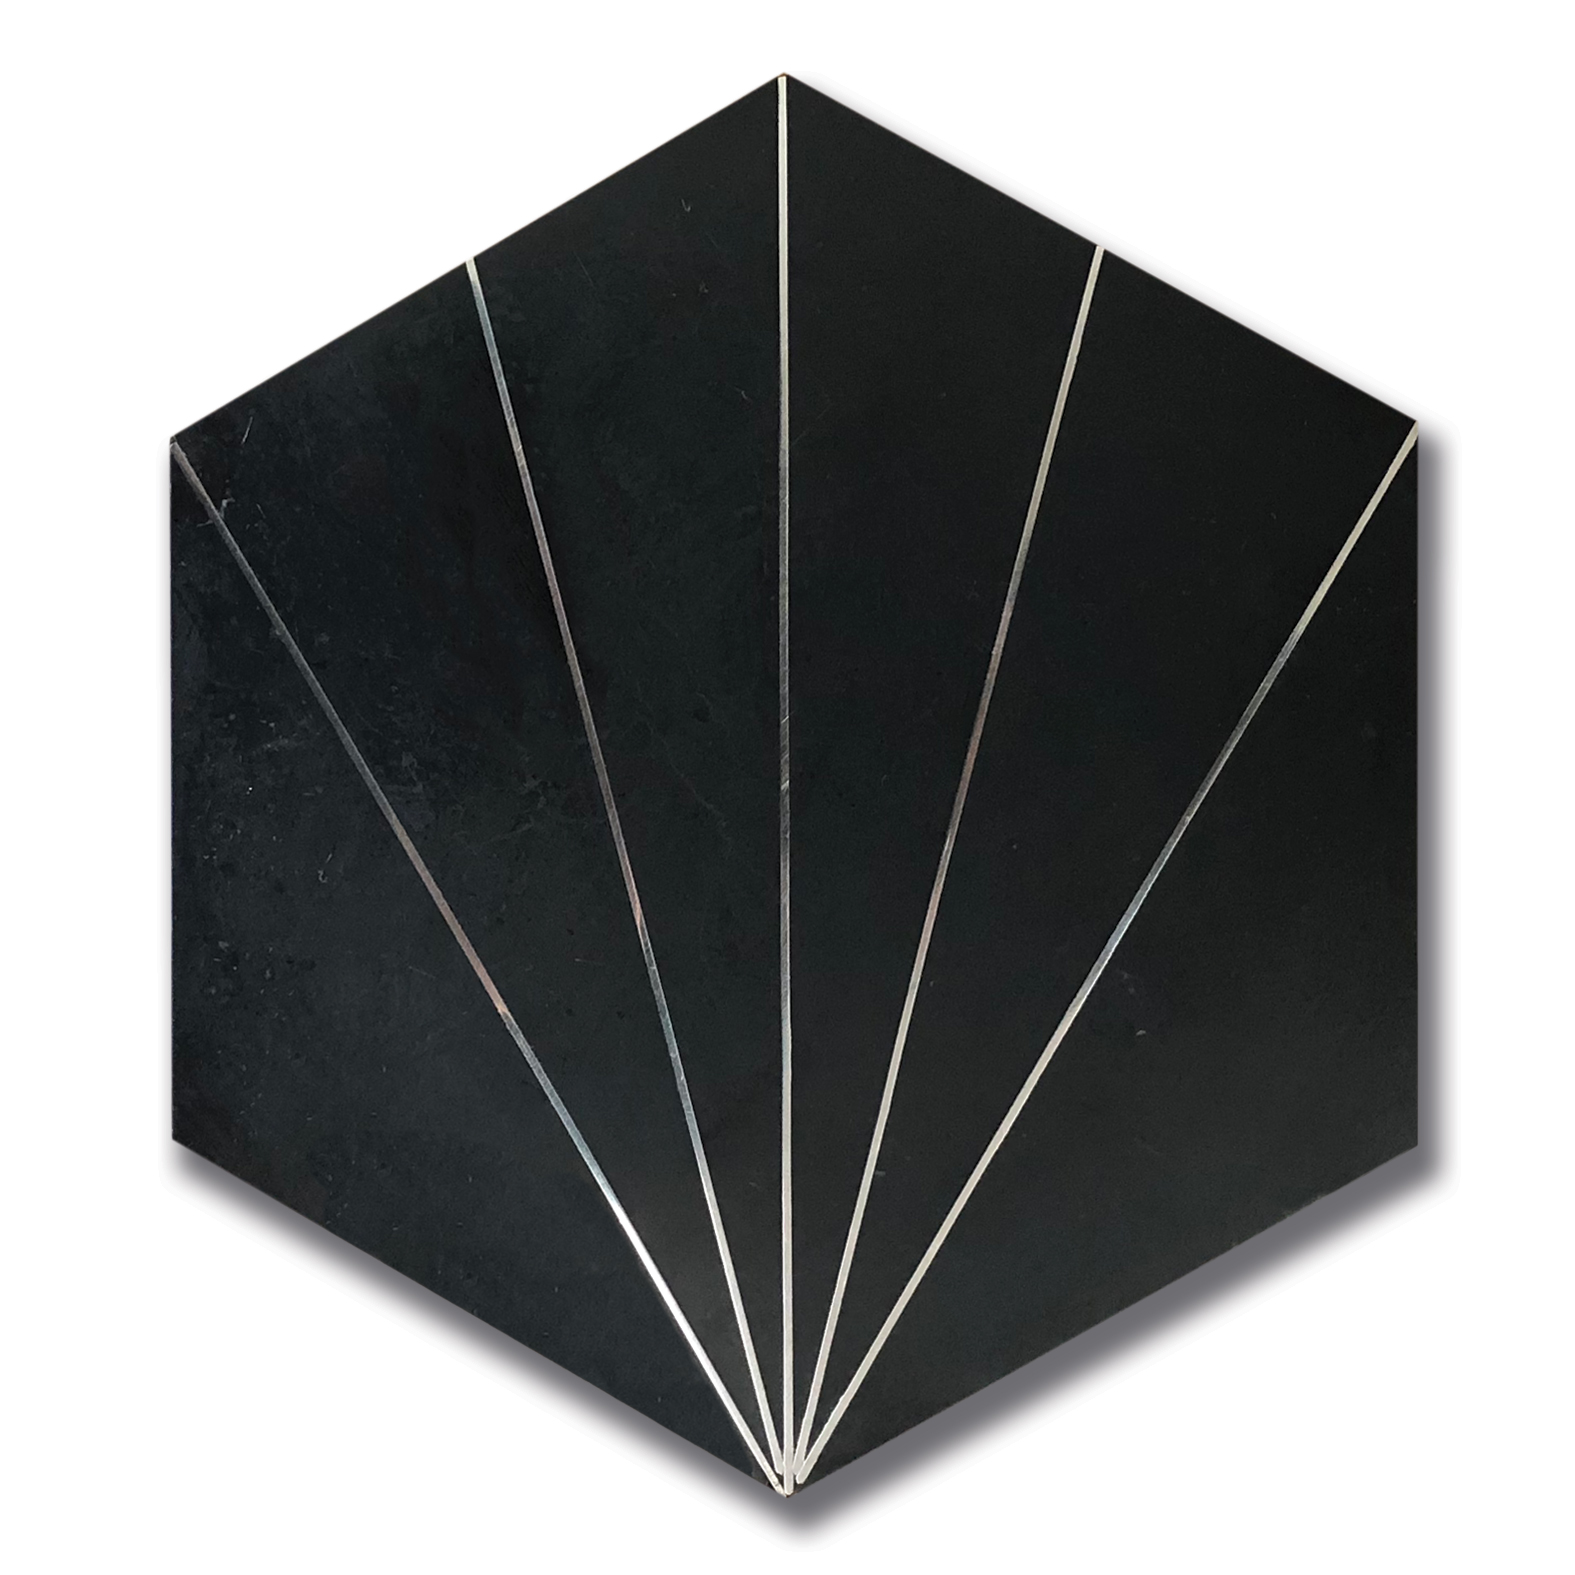 https://www.decorativematerials.com/wp-content/uploads/2021/02/DECMAT_Desire-Tulip-Black_Stainless-Steel_1.jpg